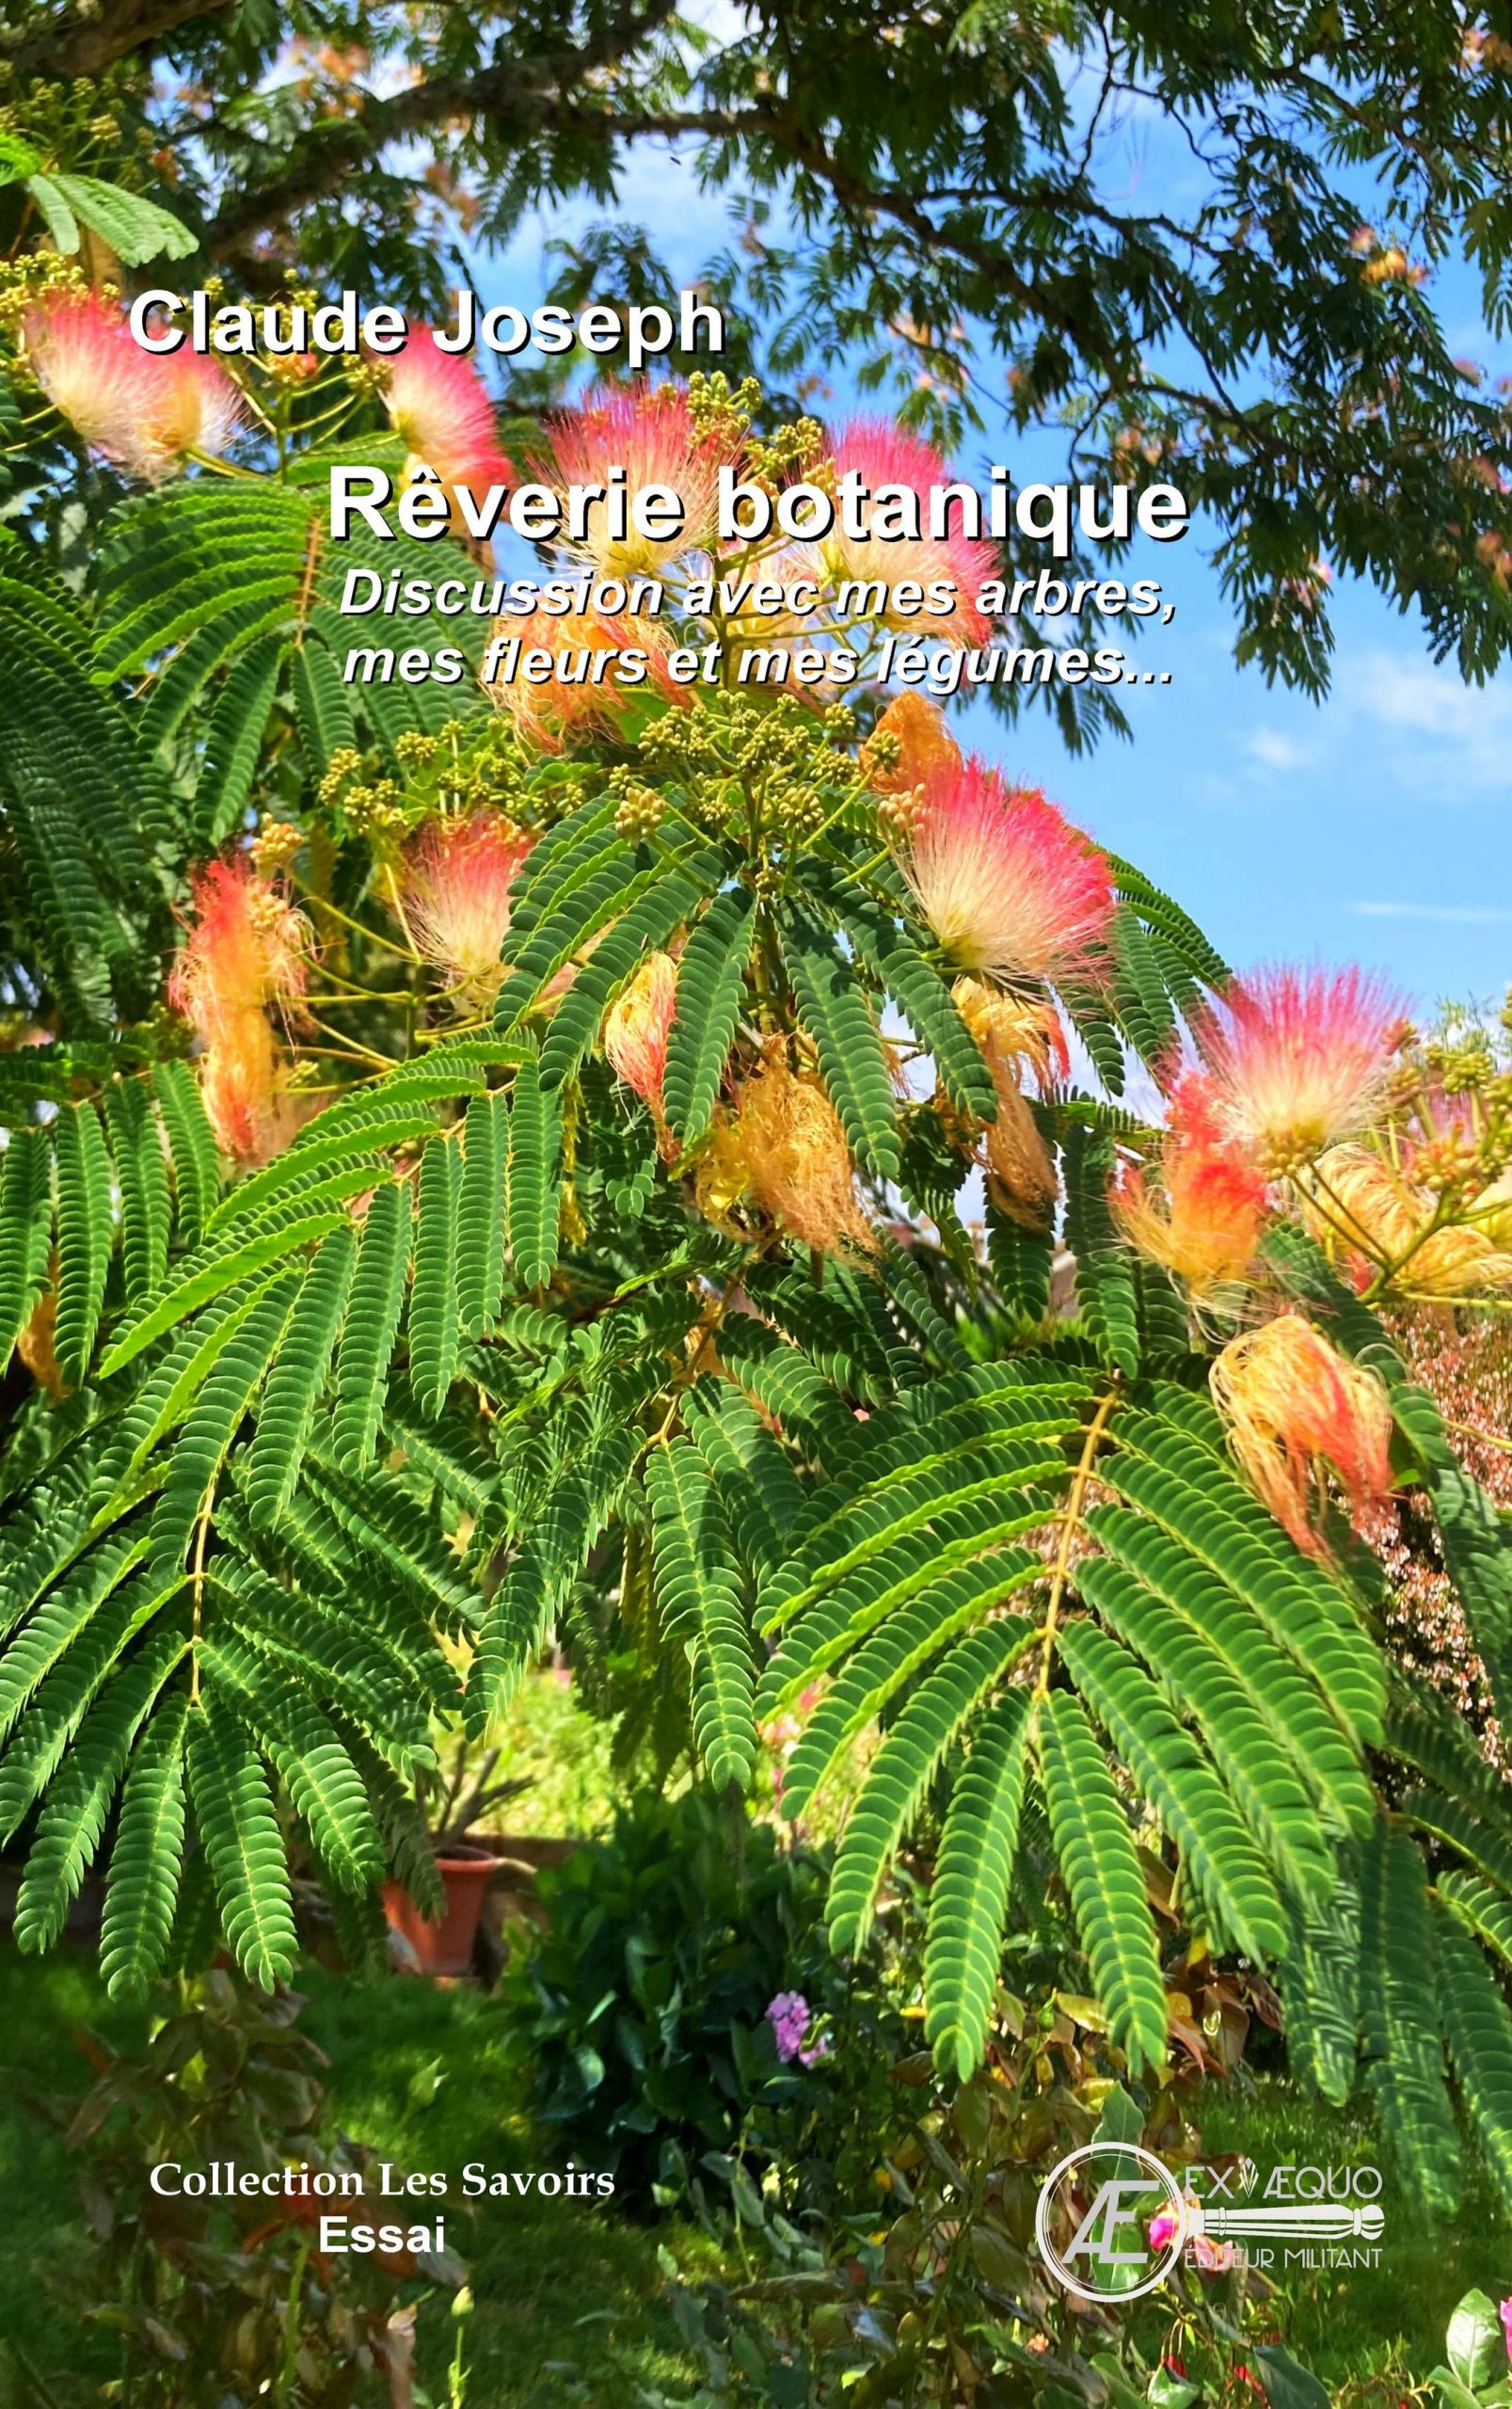 You are currently viewing Rêverie botanique, de Claude Joseph